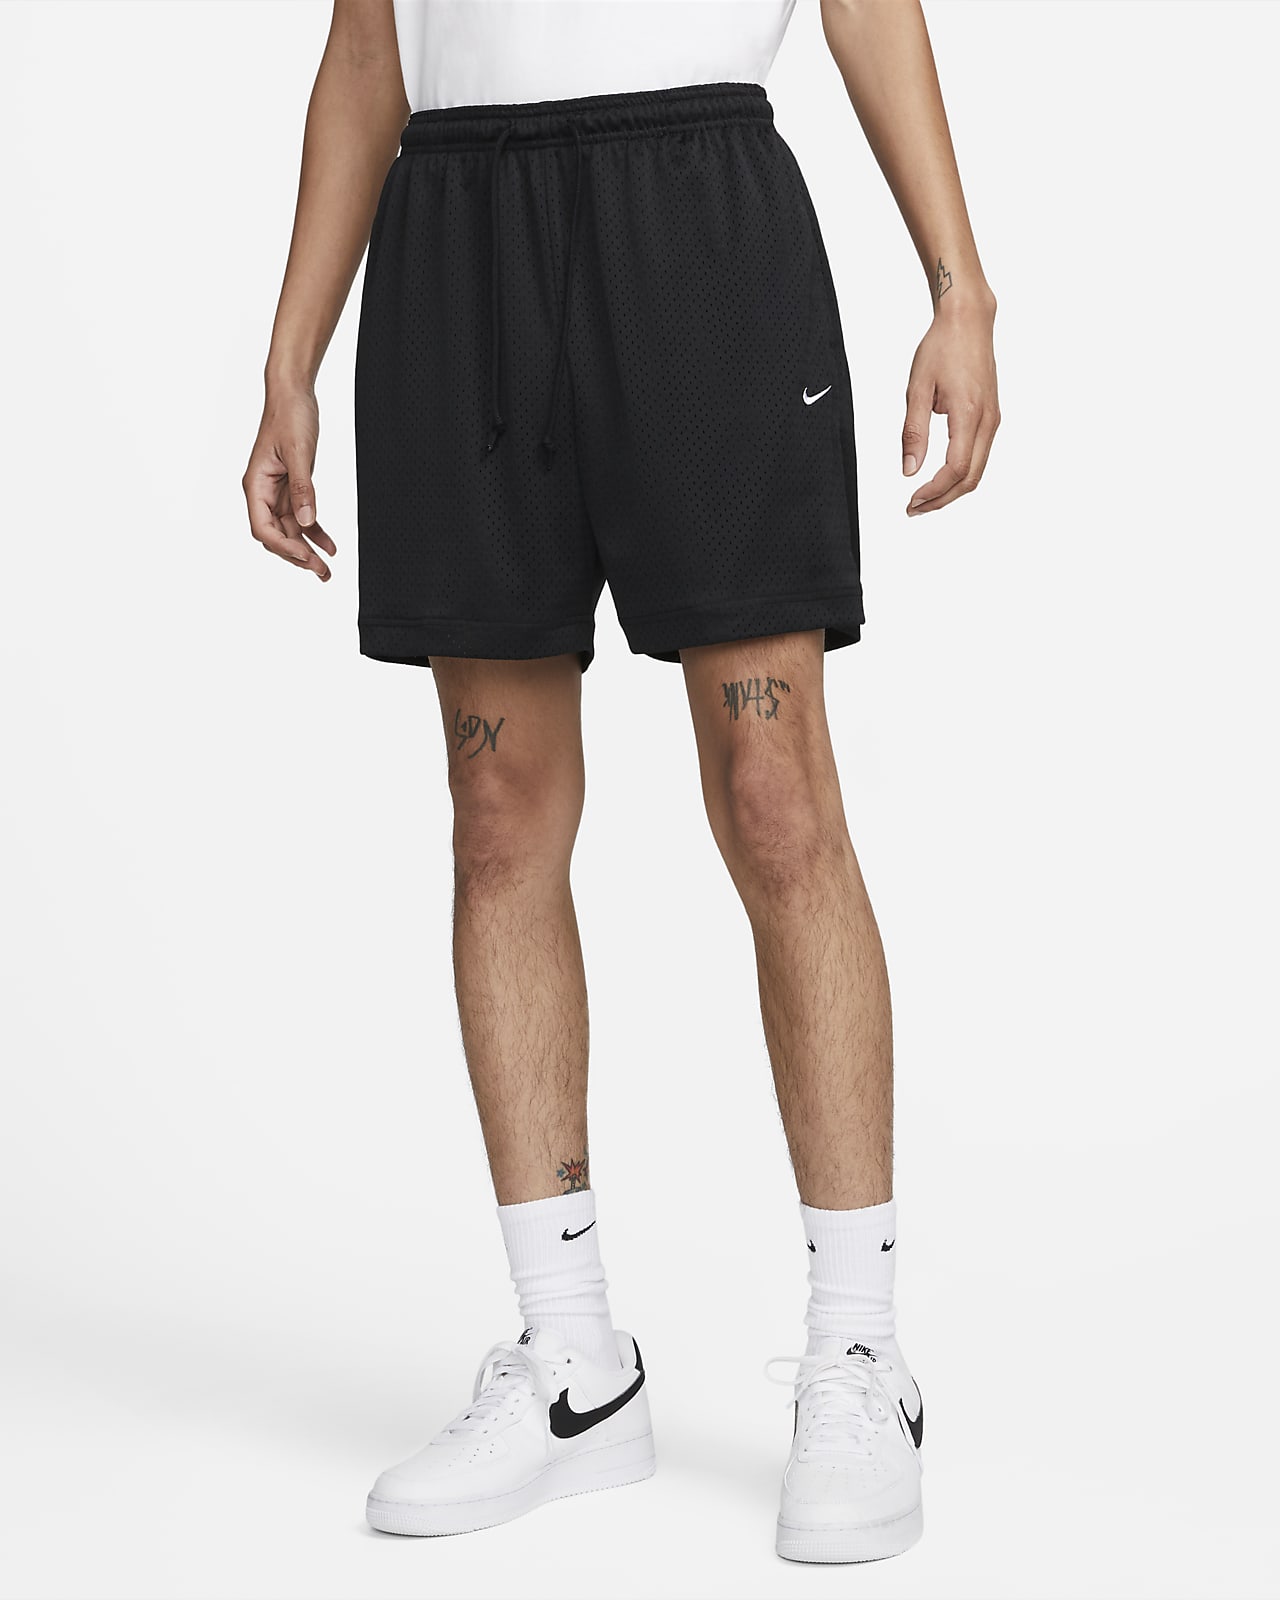 Nike Shorts Mens Large Black Sweat Pants Athletic Casual Pockets 10